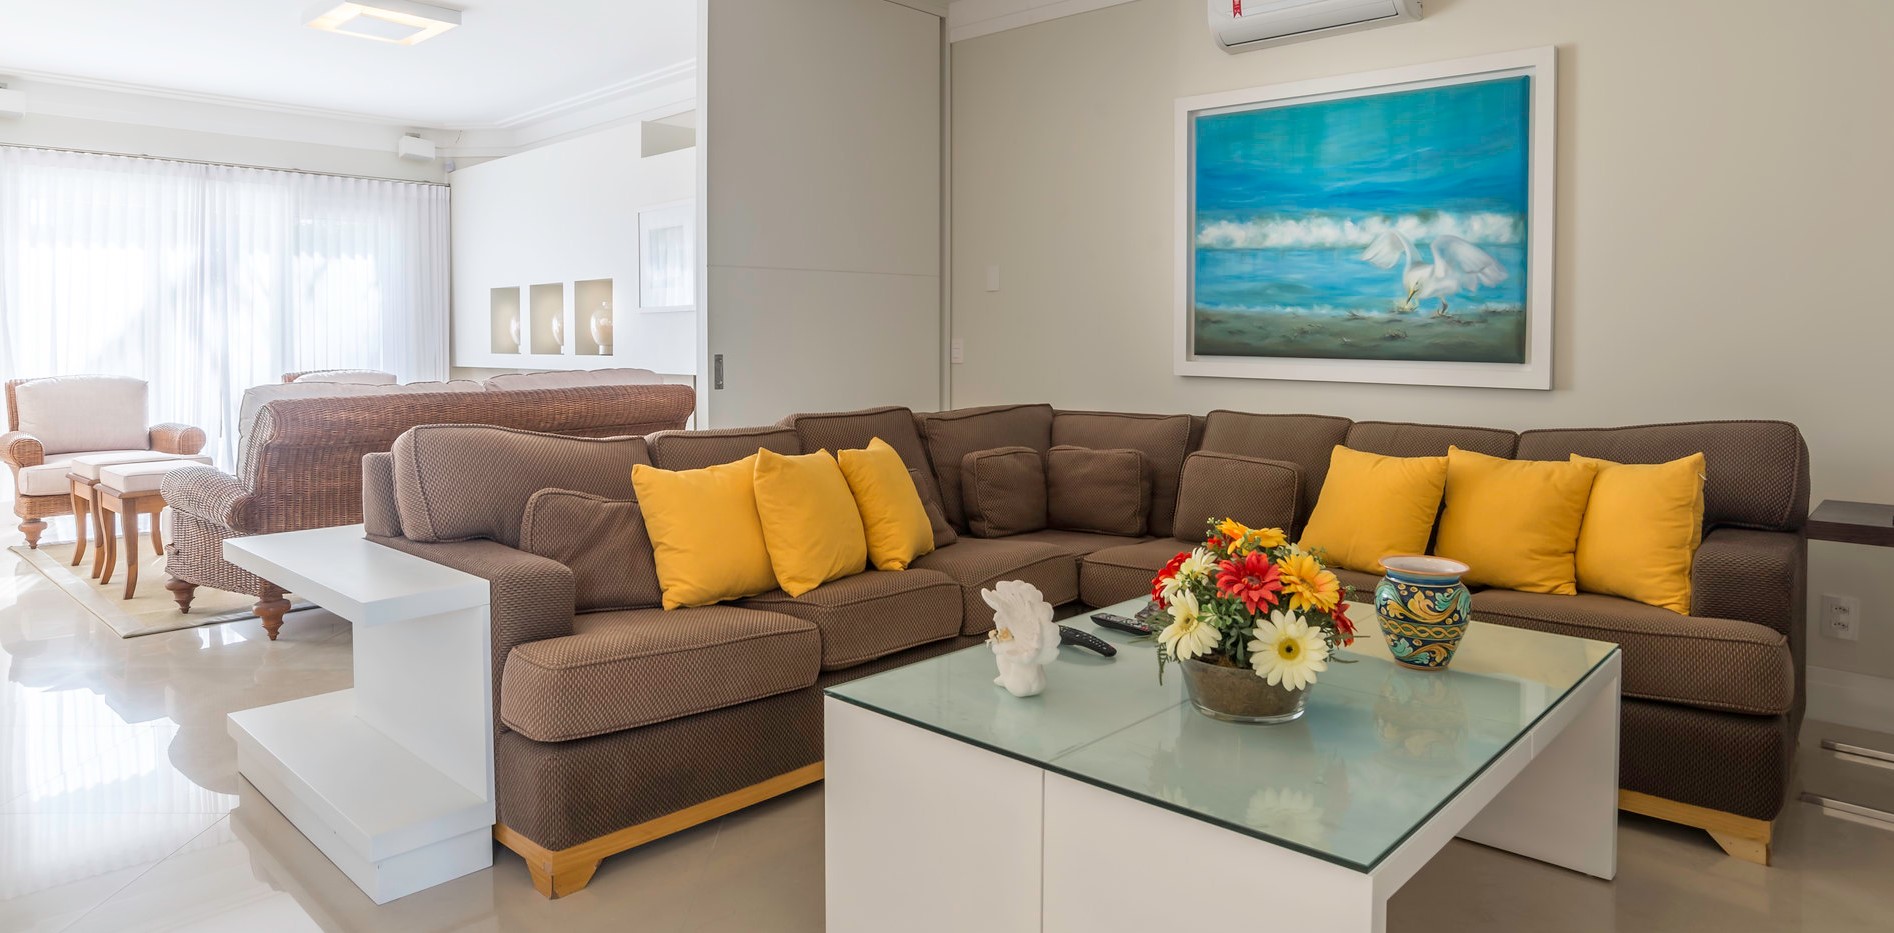 Желтые подушки станут акцентным декором на коричневом диване